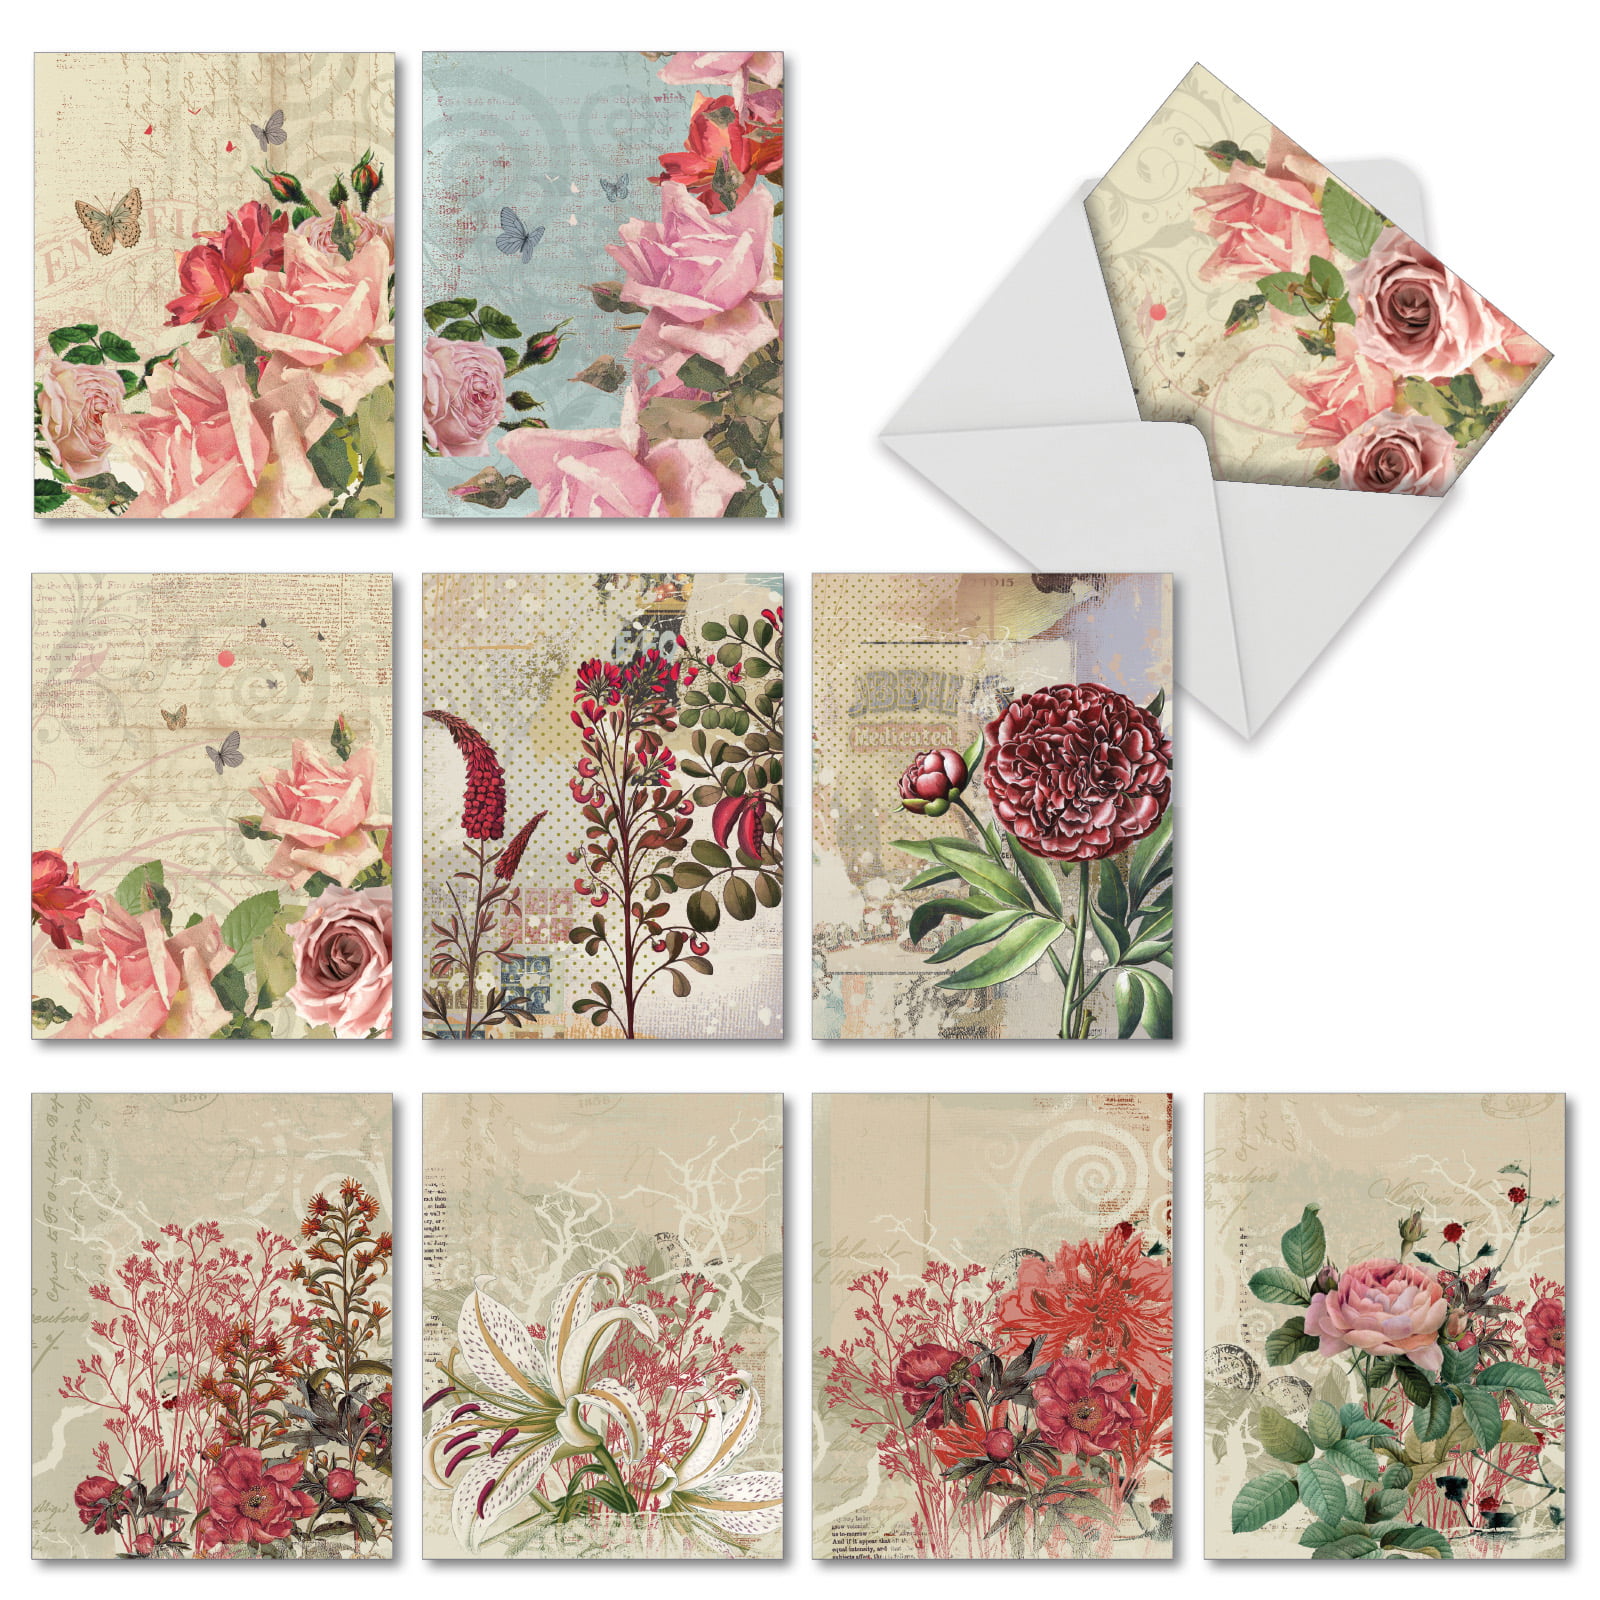 Flower Assortment Notecards set of 6 blank cards